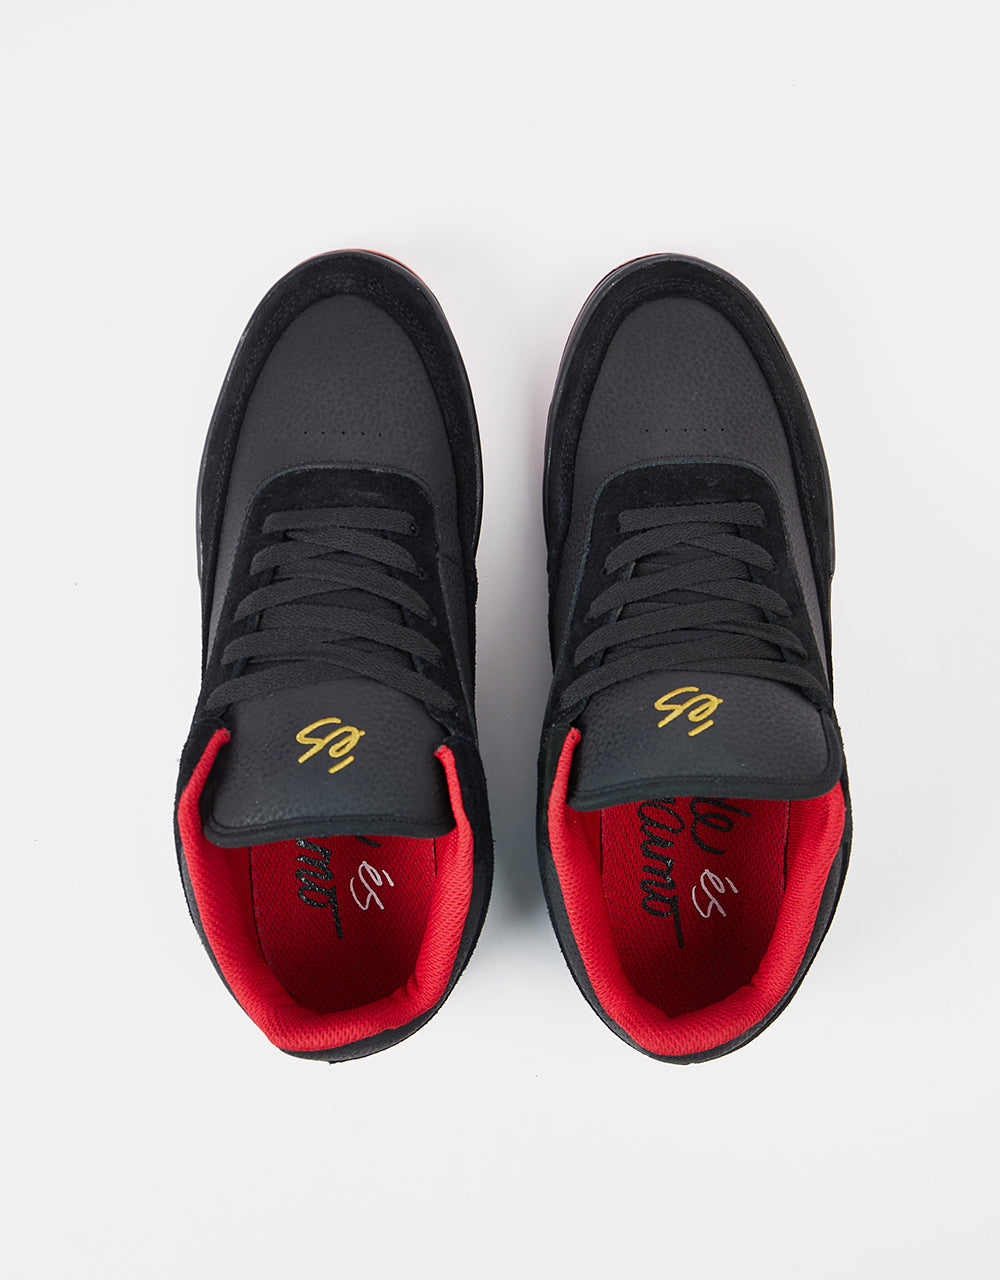 éS Stylus Mid Skate Shoes - Black/Red